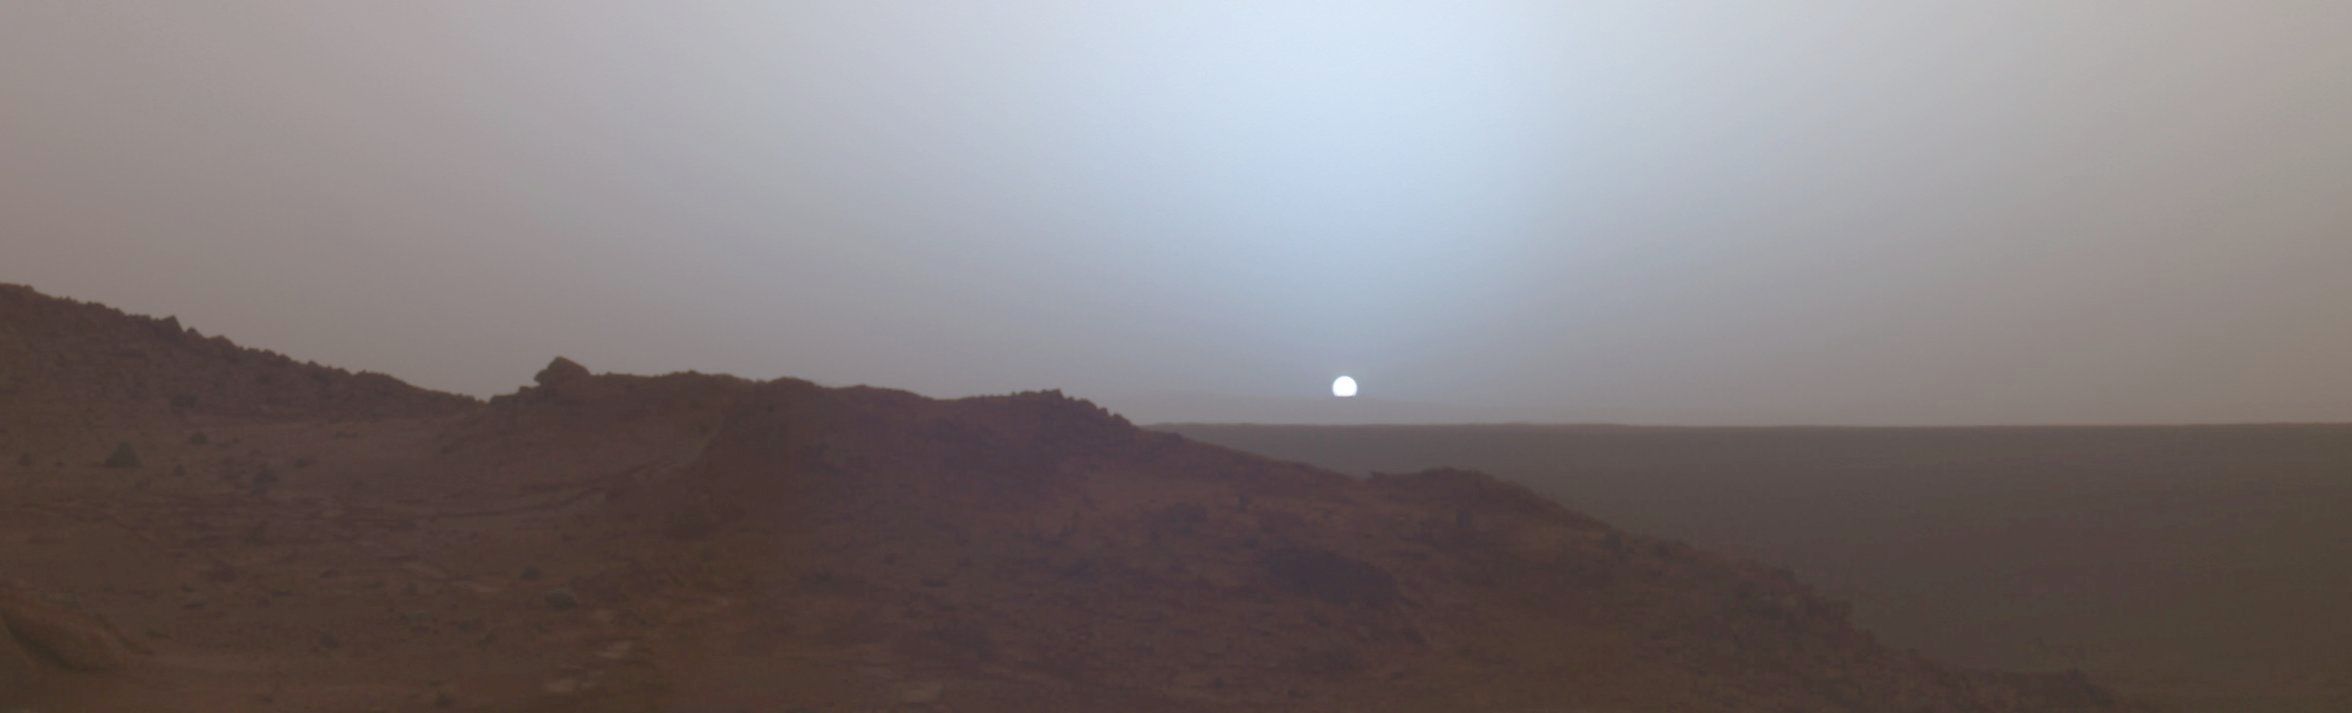 Закат на Марсе — как это выглядит? - 1